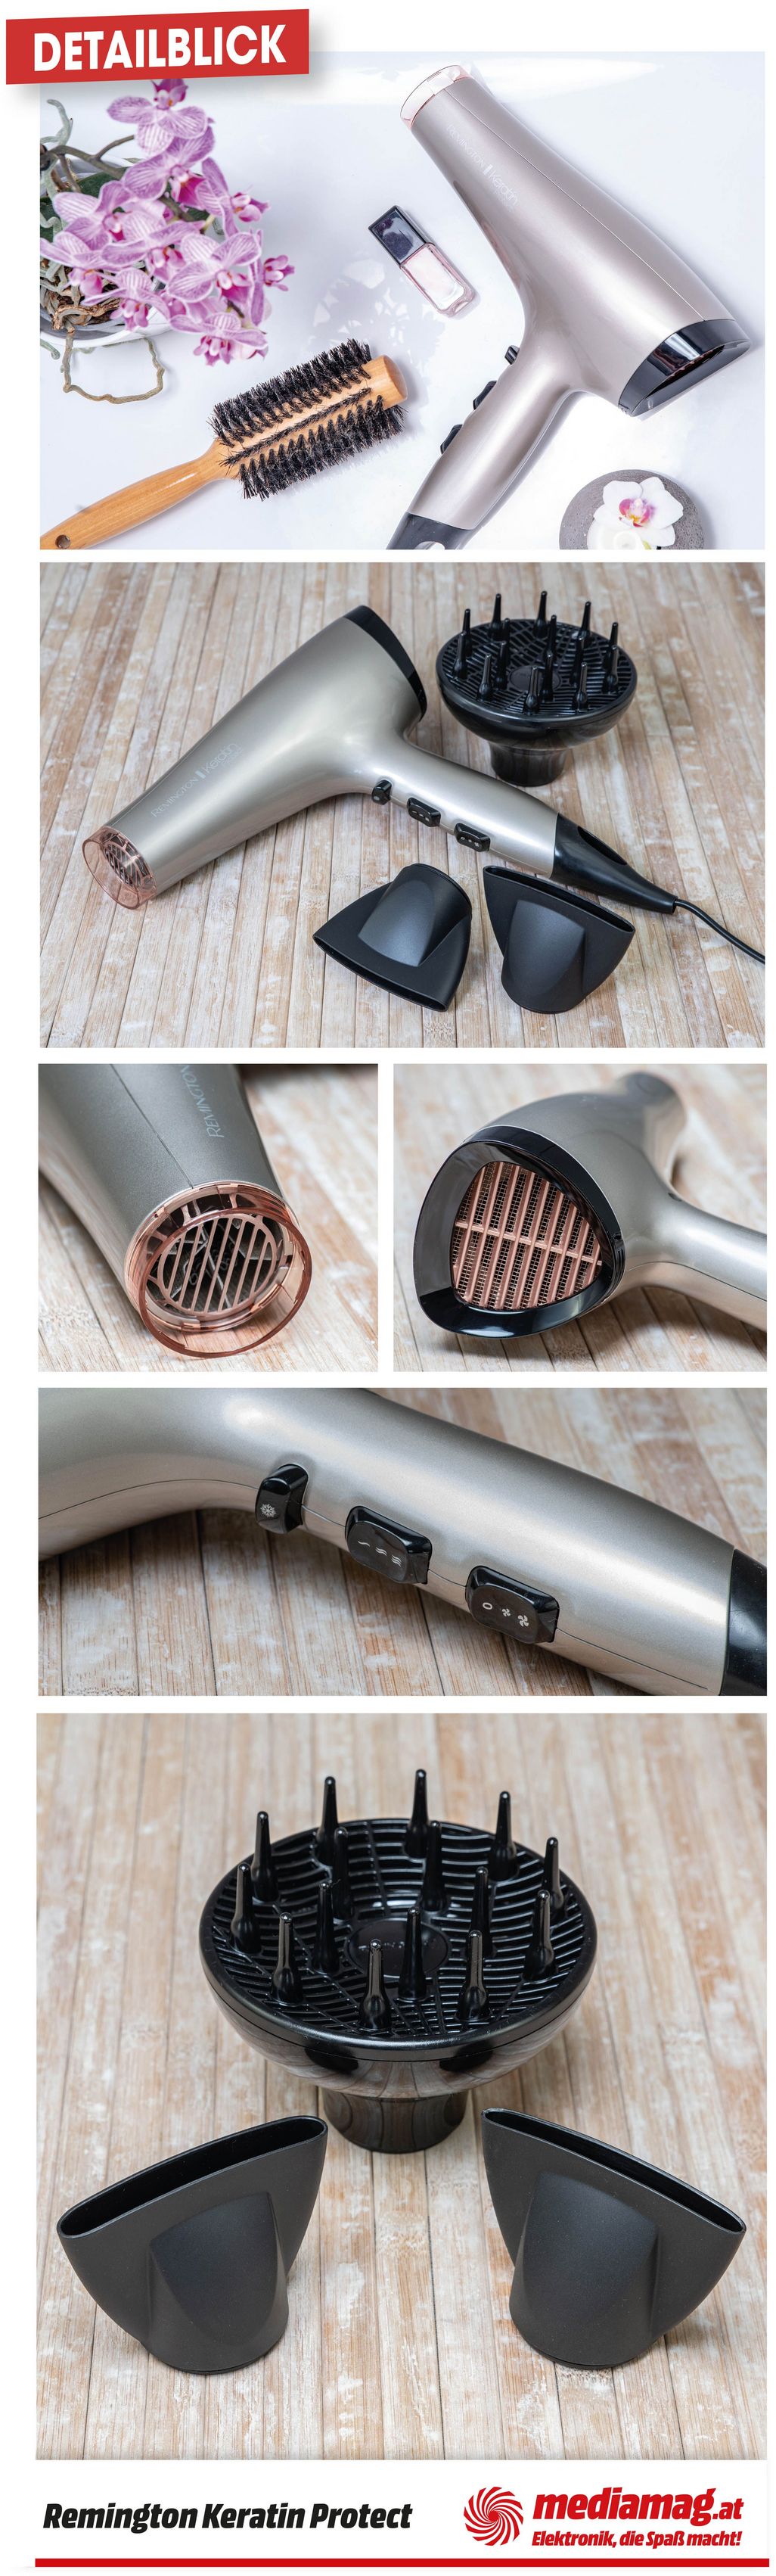 Remington Keratin Protect Haartrockner AC8002: Stylingdüsen, Diffusor und Keratinbeschichtung stylen das Haar schonend.